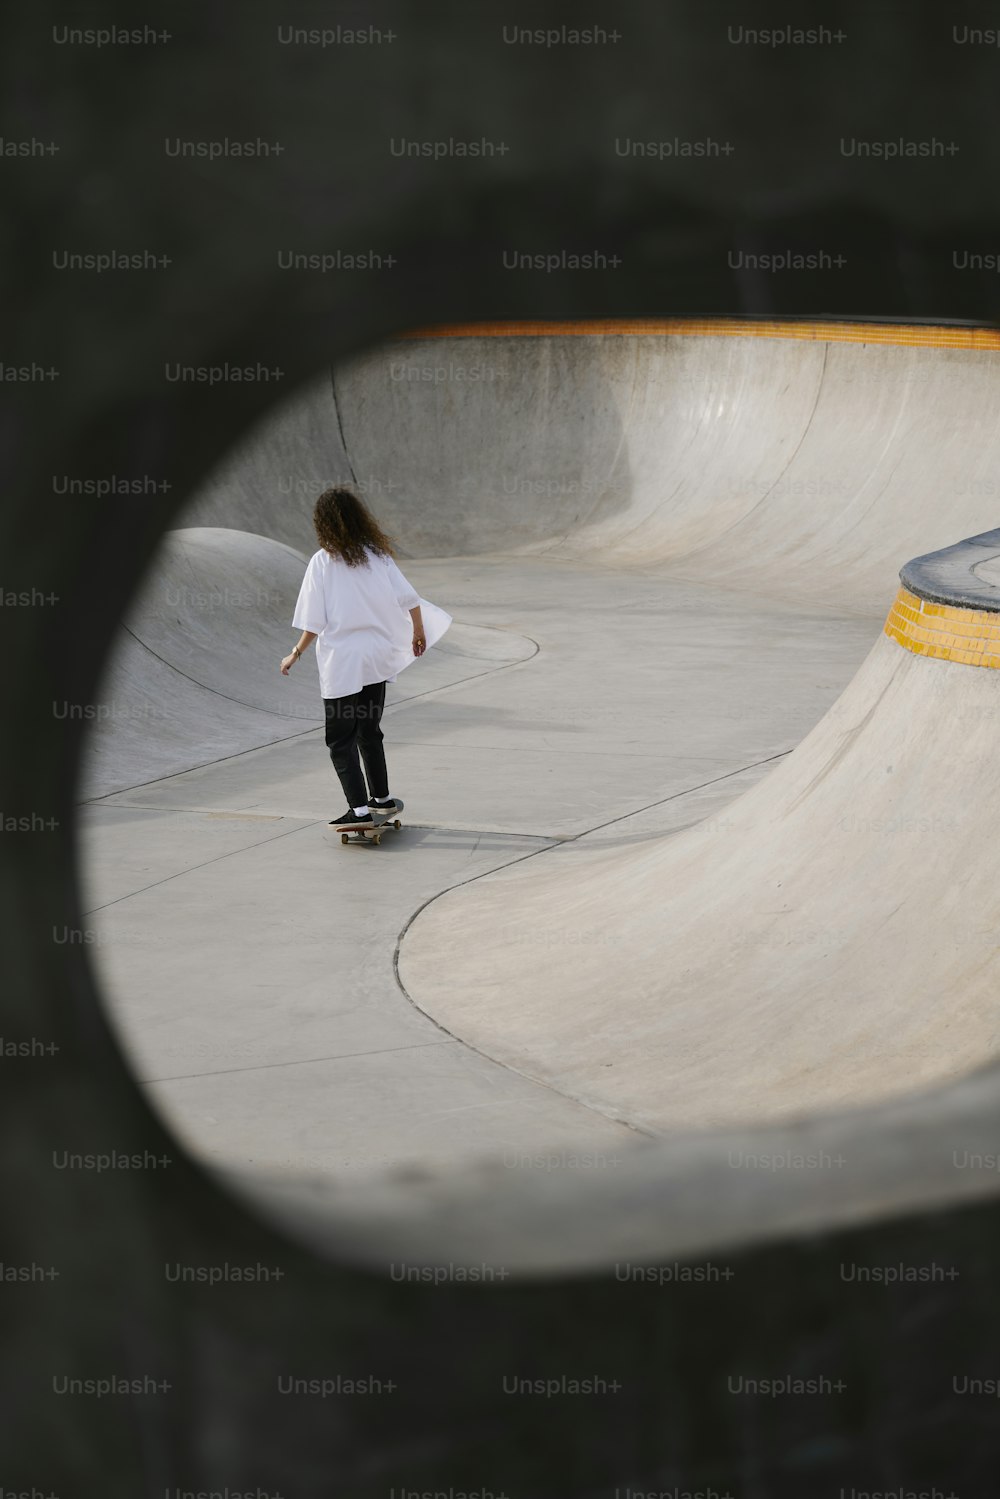 a person riding a skateboard at a skate park